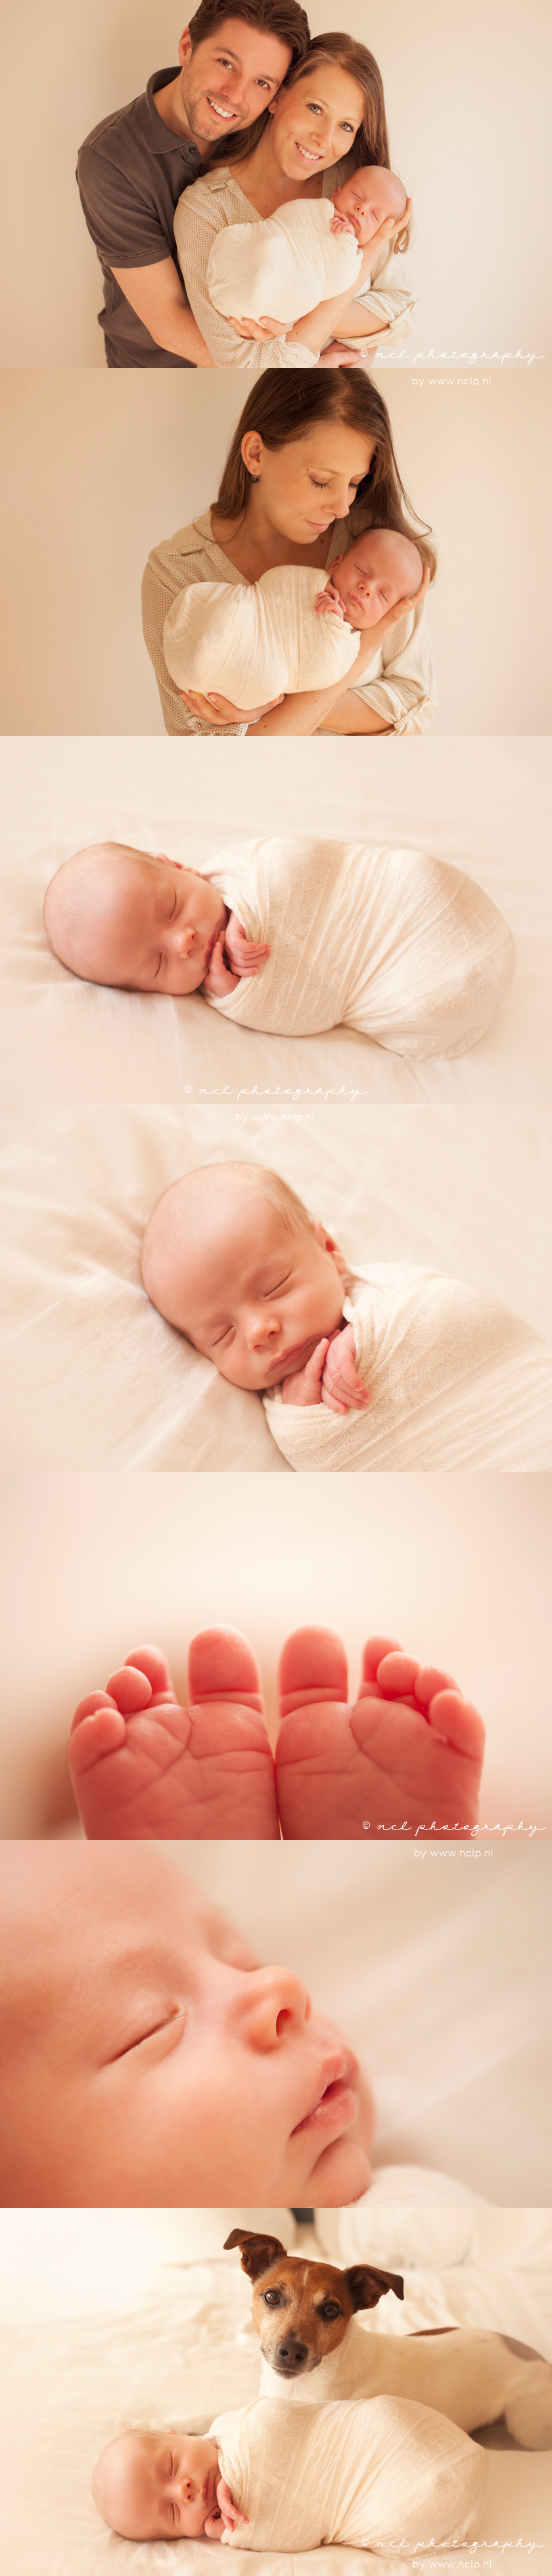 NCL Photography-amsterdam-newborn-fotograaf-newbornfotografie-hond-jack russel-064